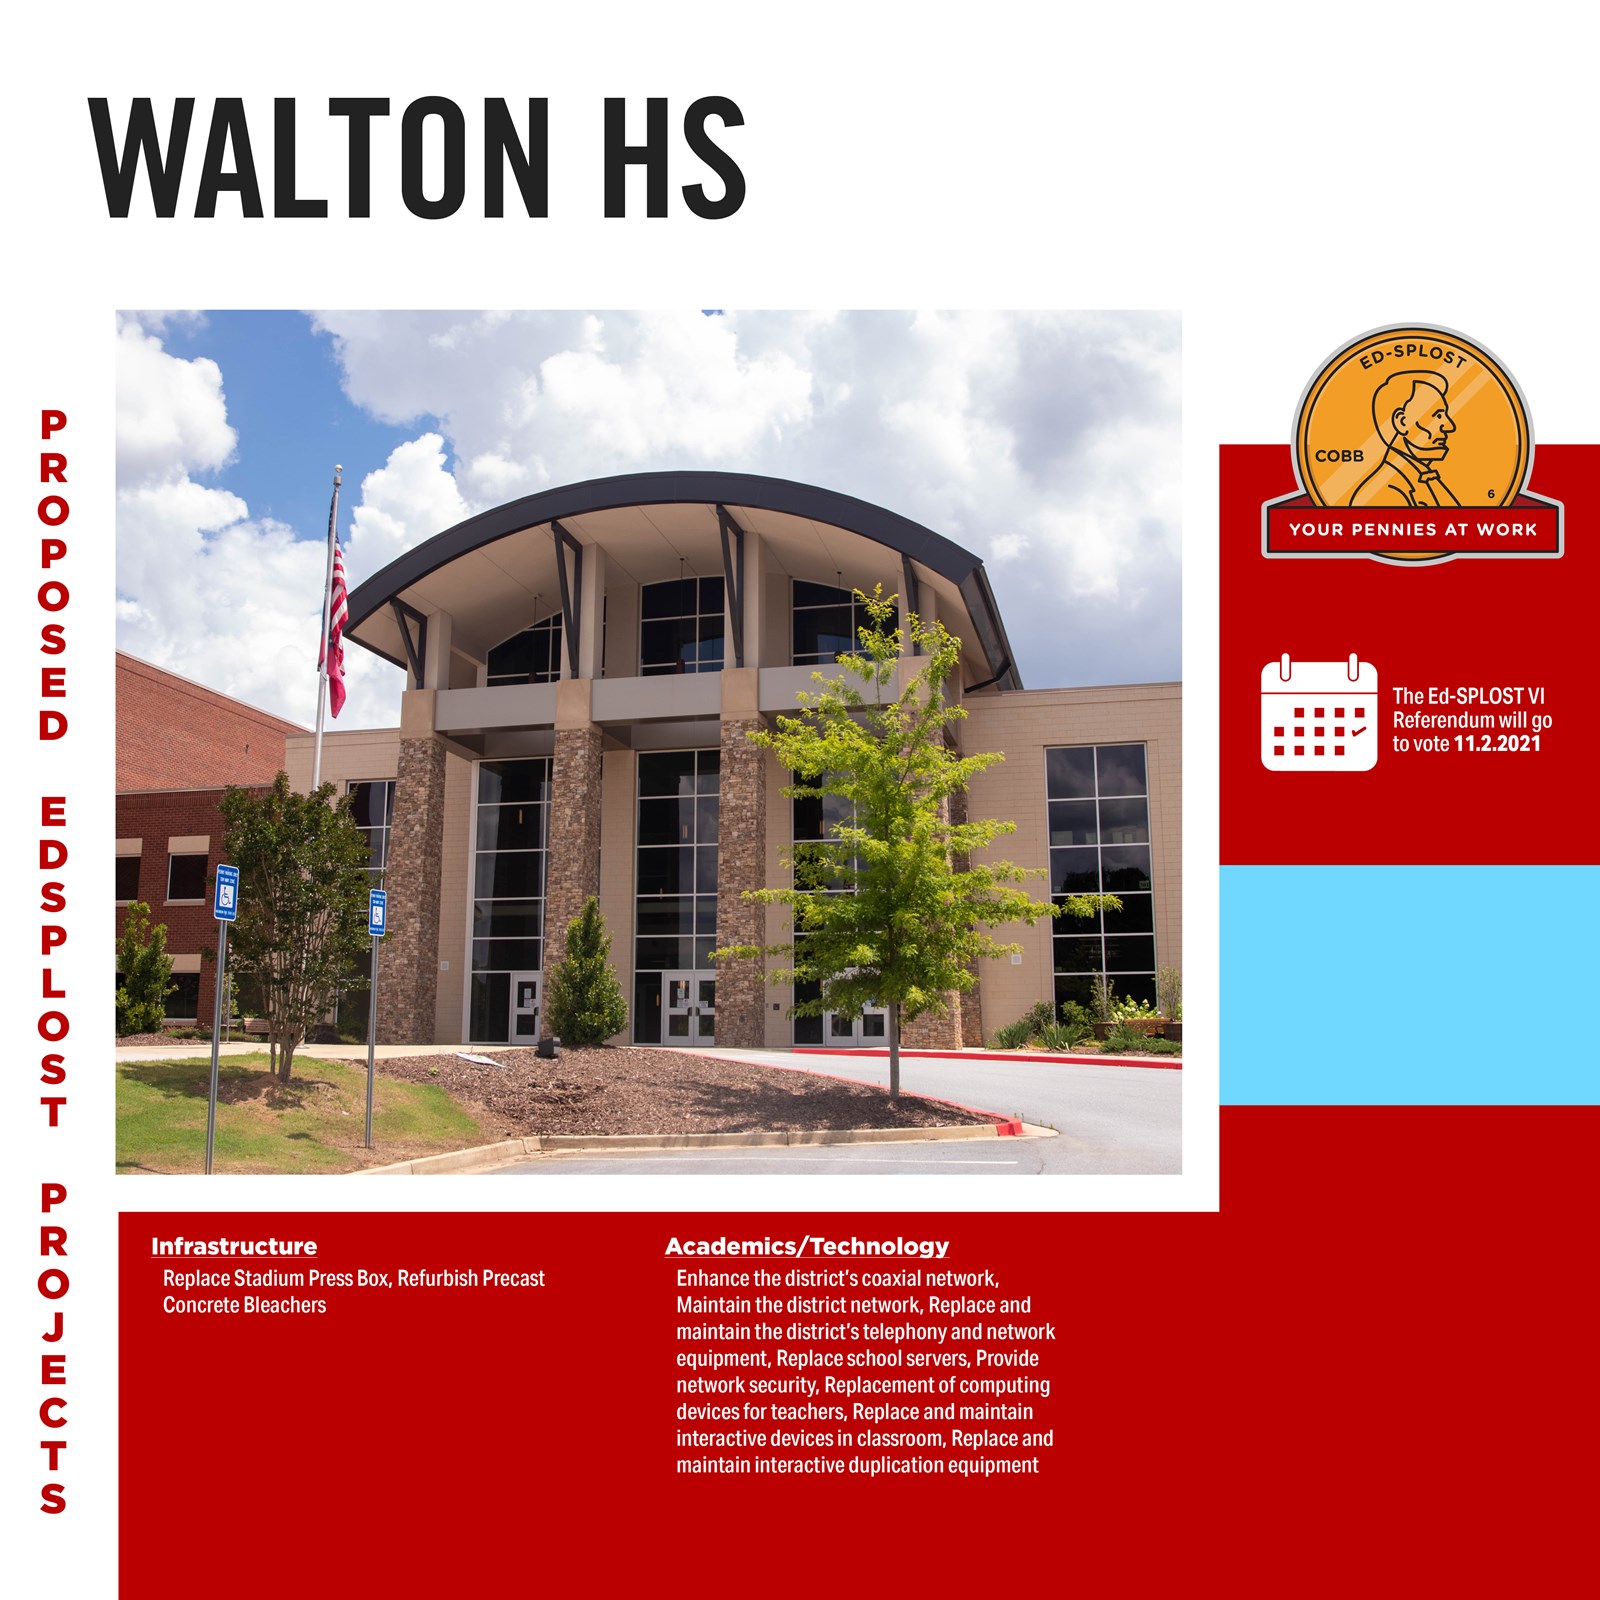 Walton-1.jpg